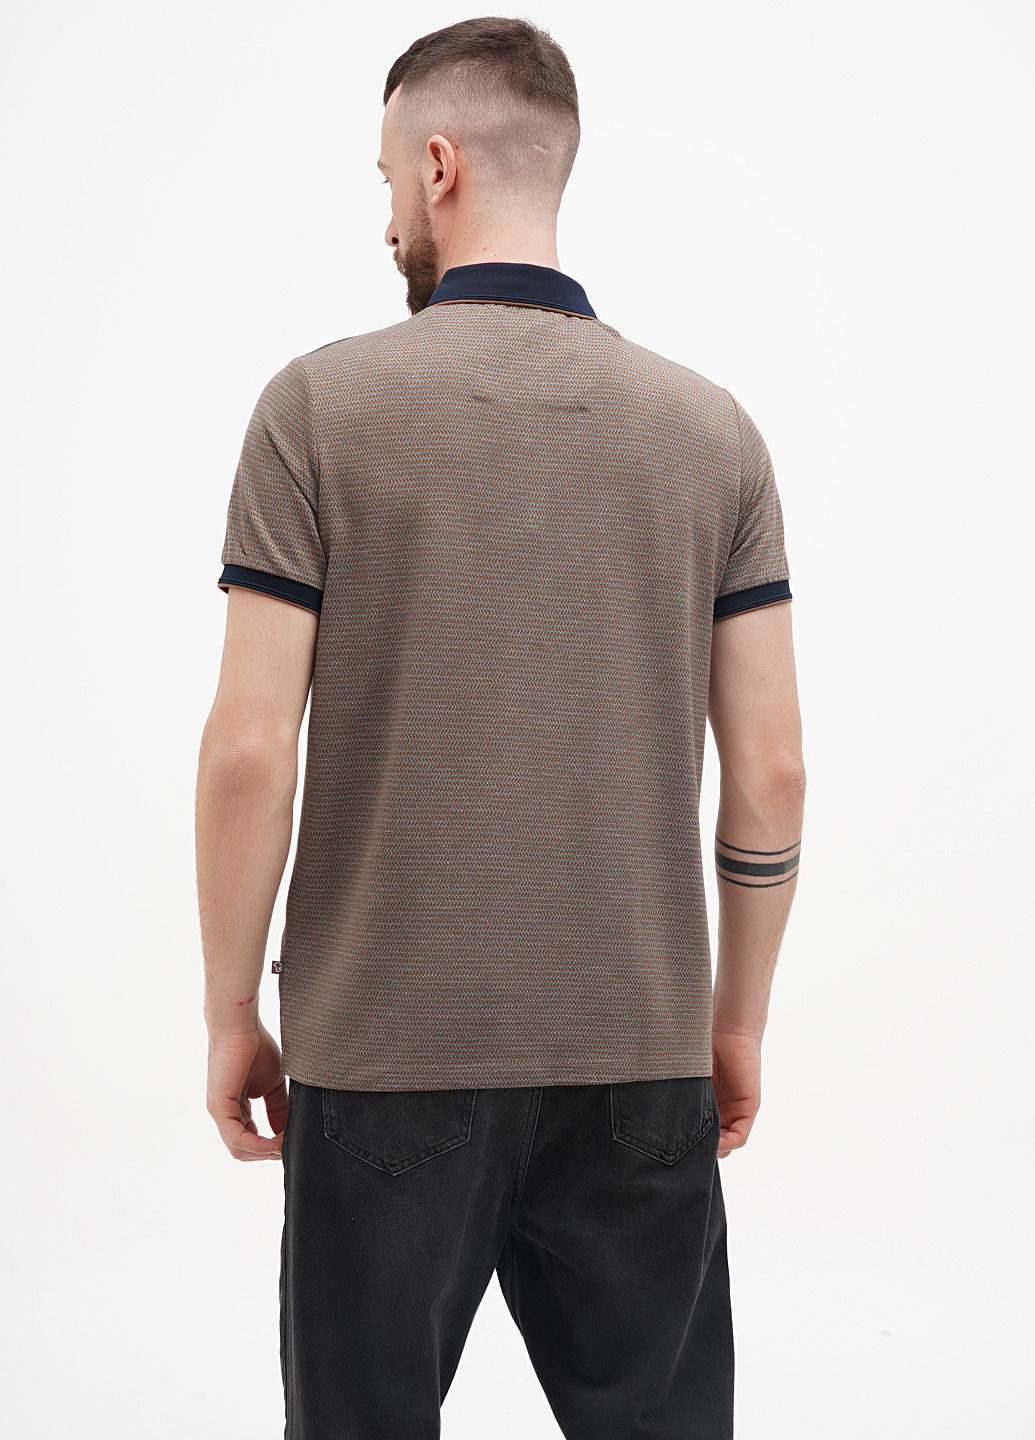 Серо-коричневая футболка-поло для мужчин Benson & Cherry с геометрическим узором